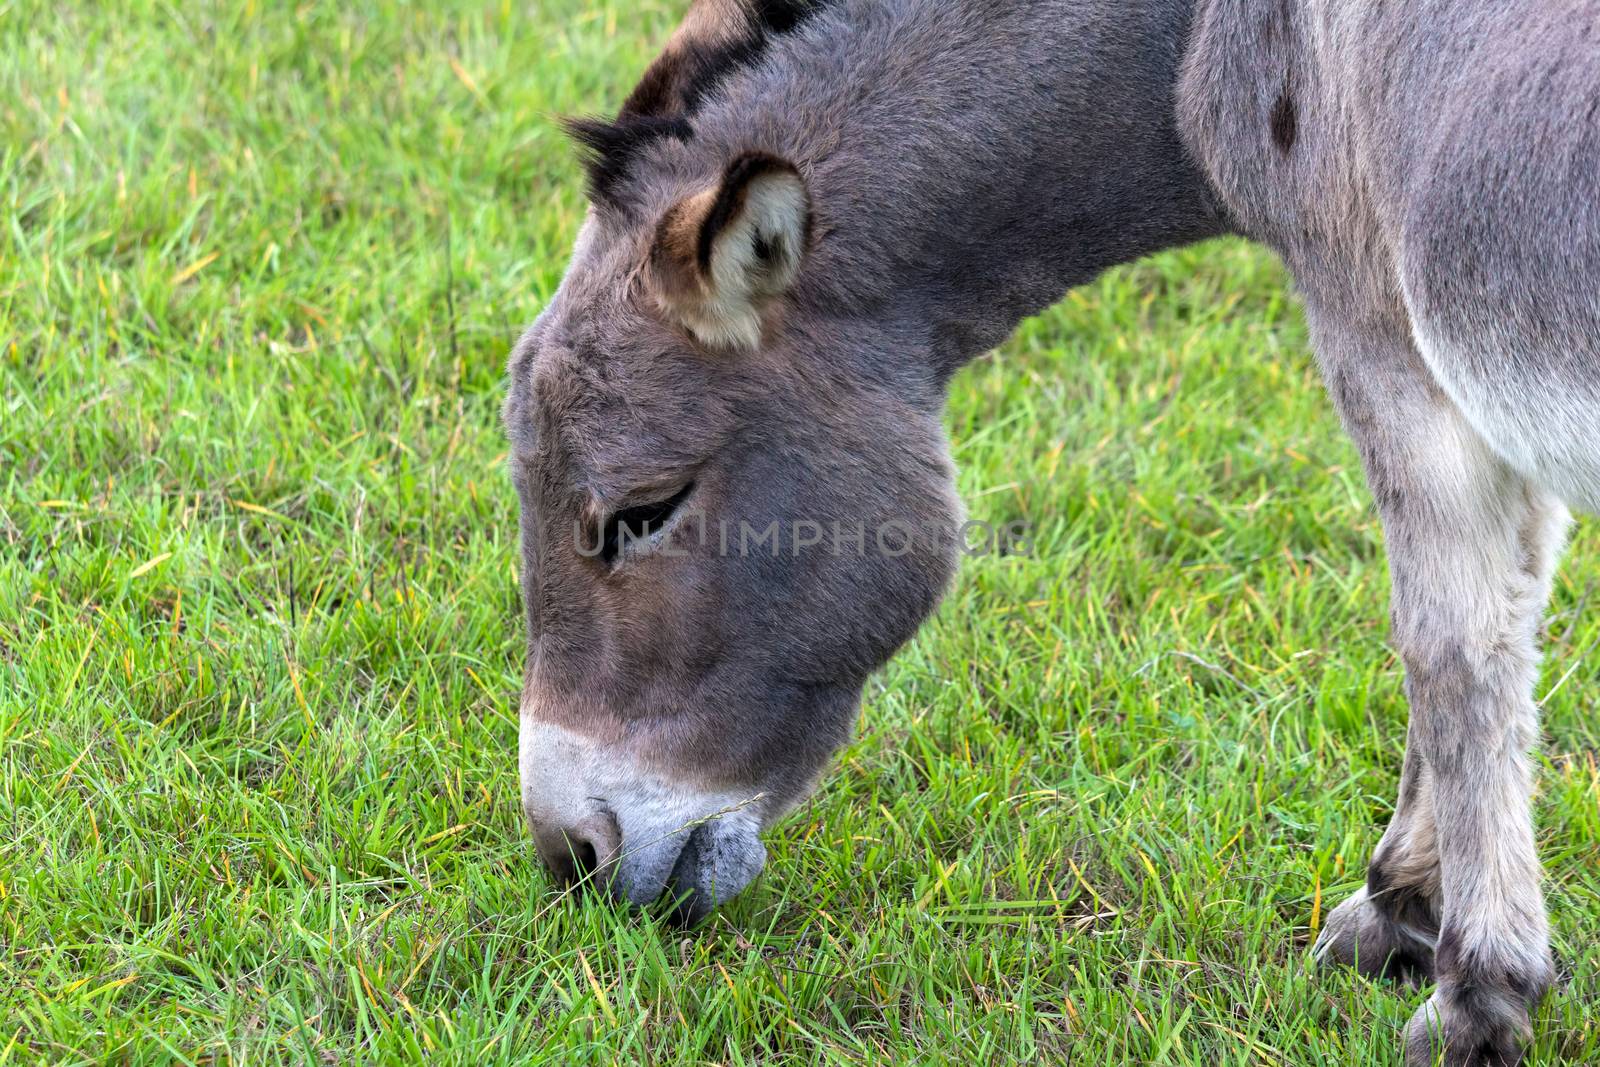 Donkey grazing on green grass in farmland closeup portrait